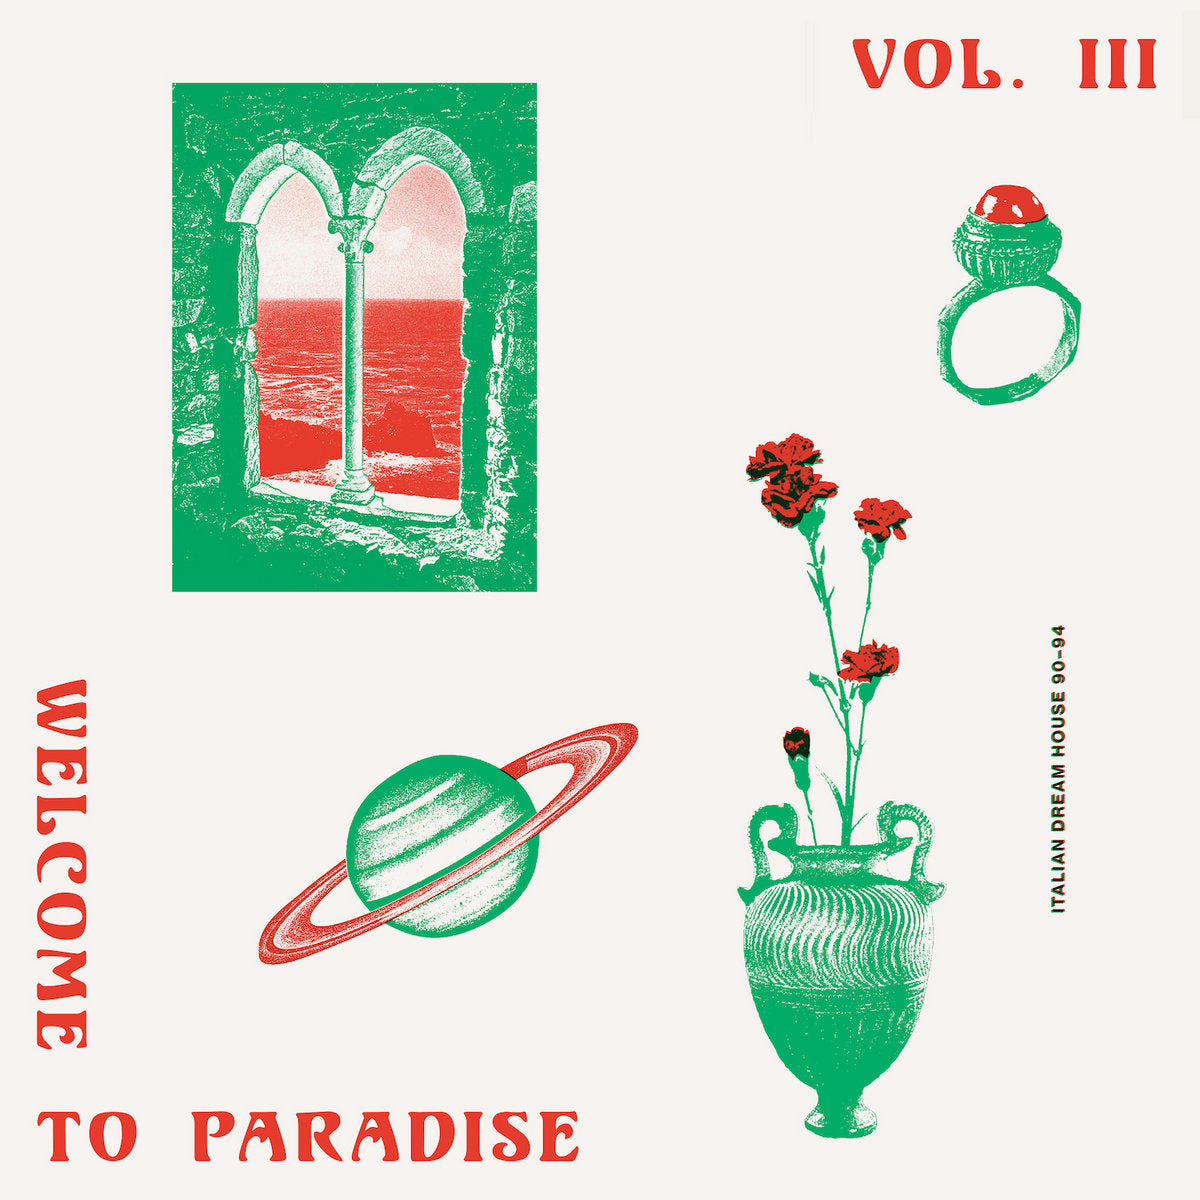 VARIOUS ARTISTS - WELCOME TO PARADISE VOL. 3: ITALIAN DREAM HOUSE 90-94 Vinyl 2xLP